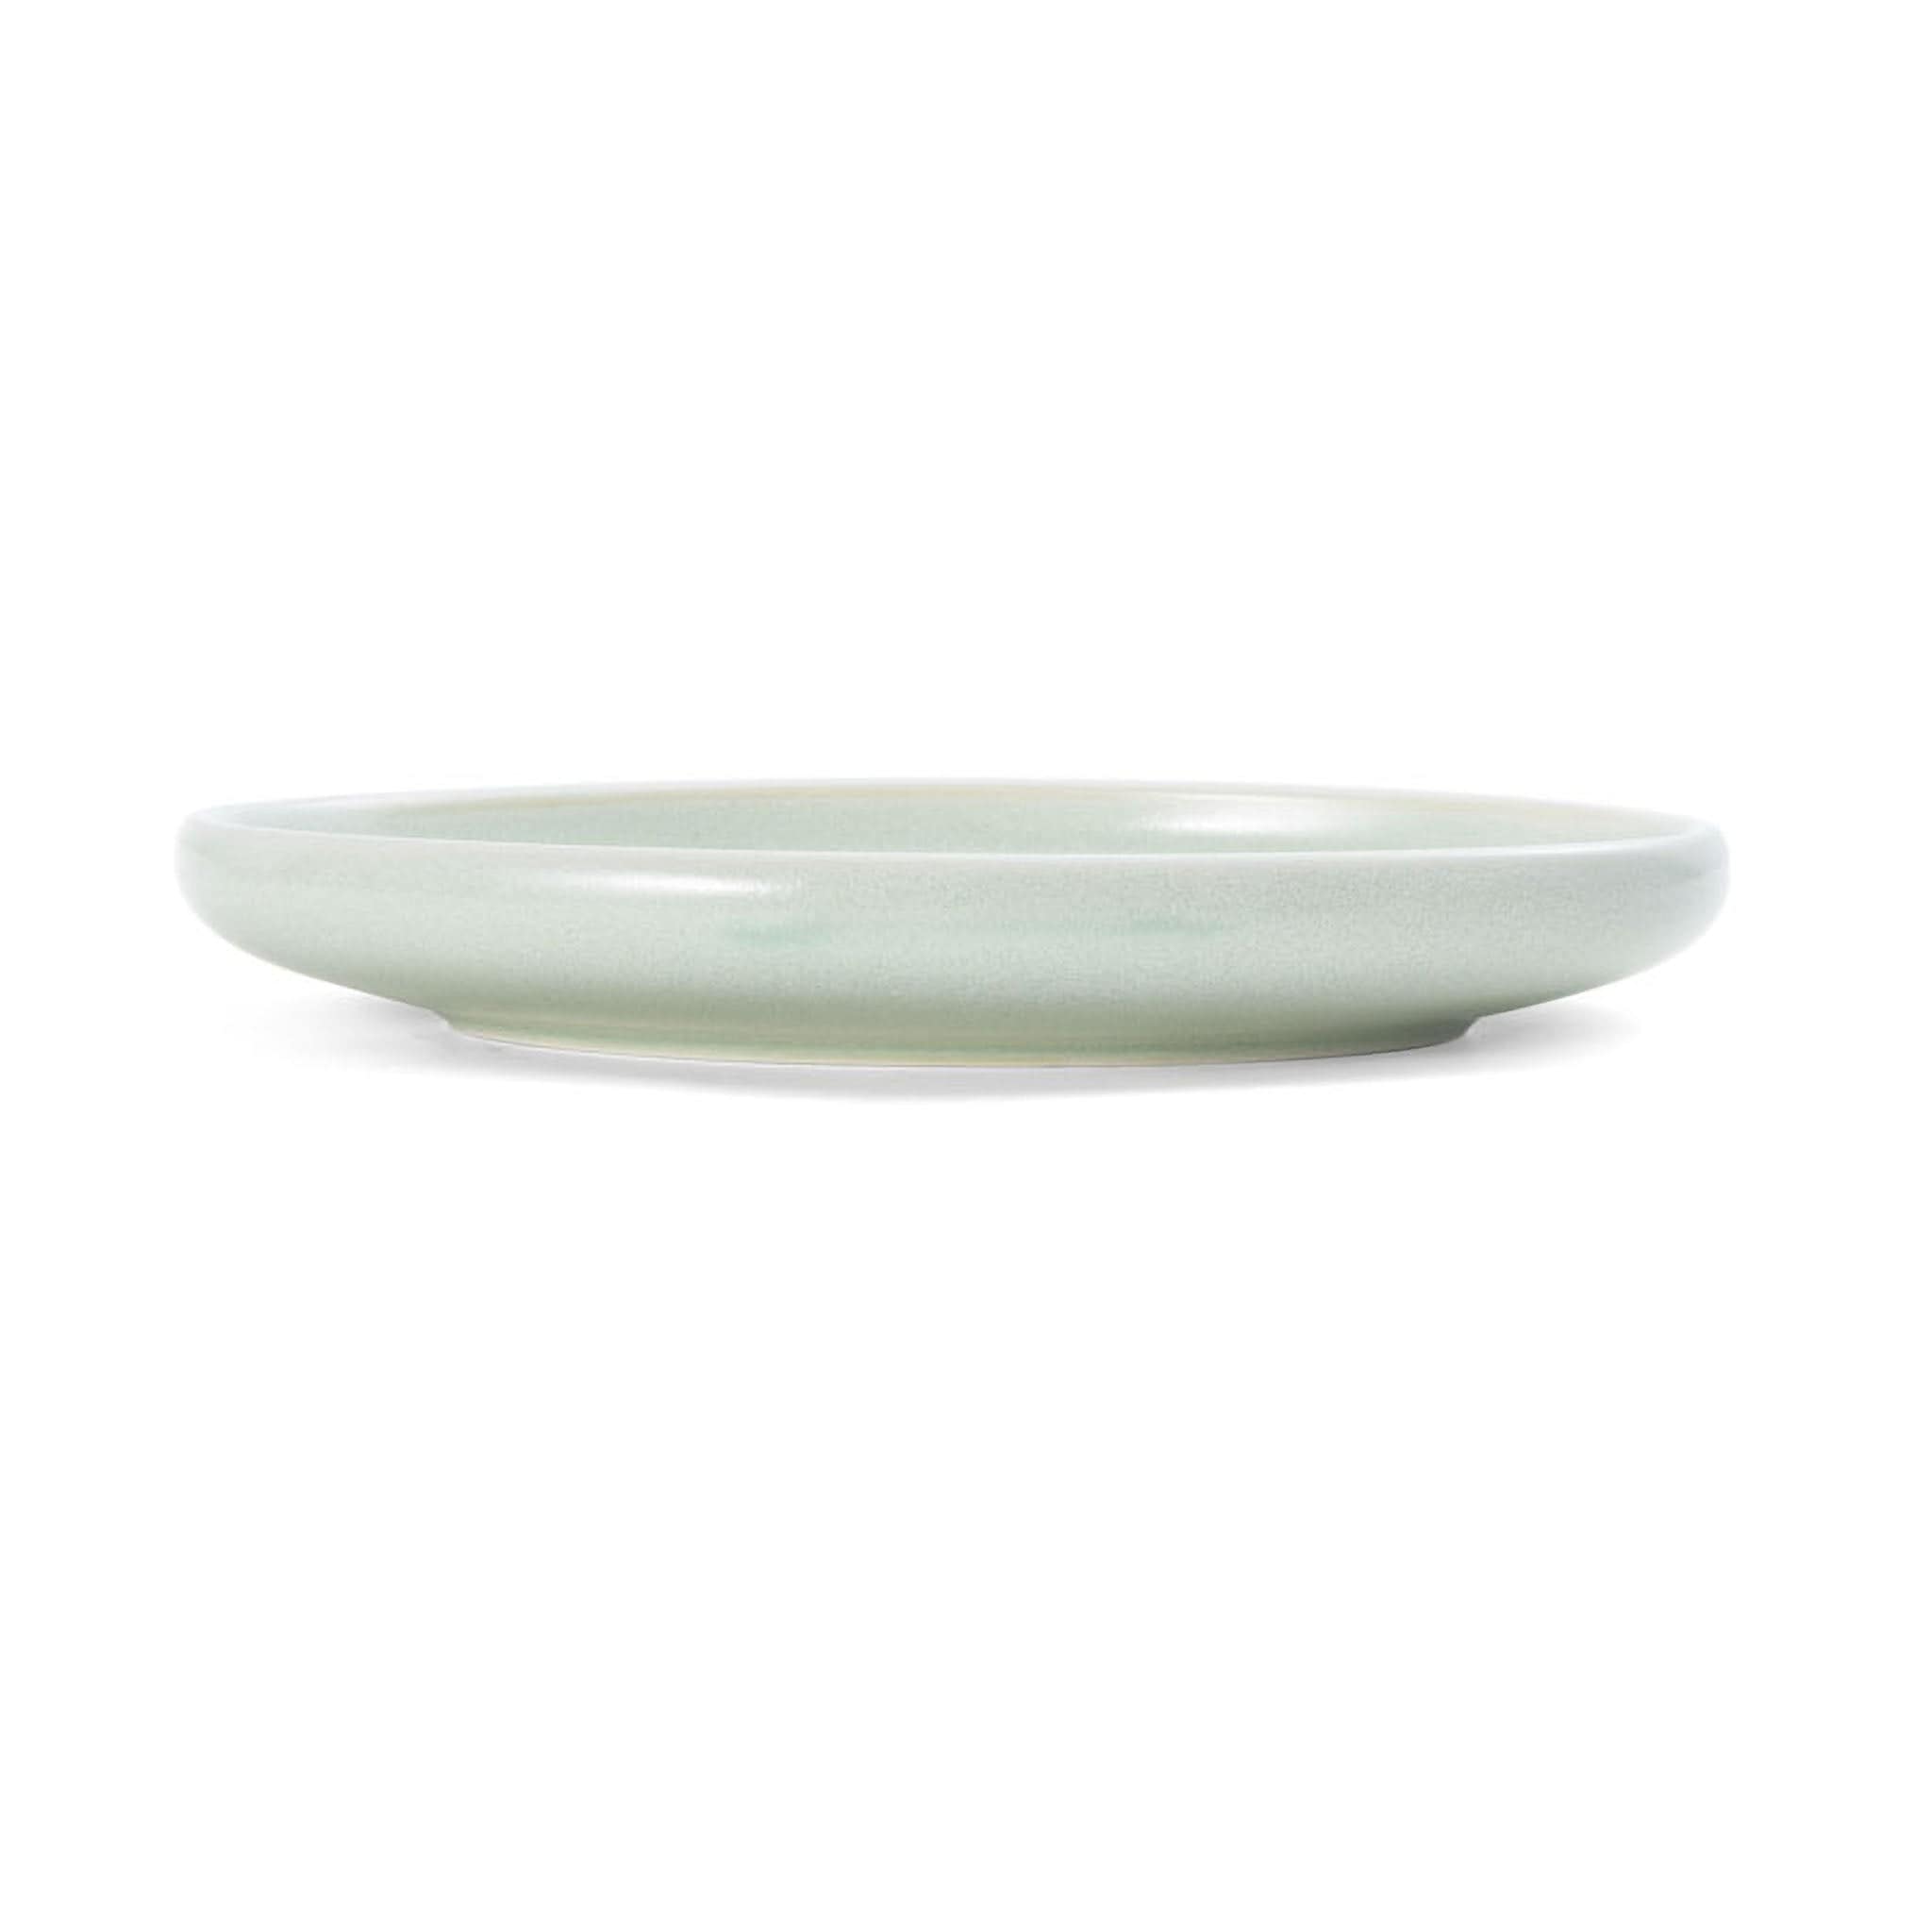 Jade Porcelain Oval Platter 11x7" Green